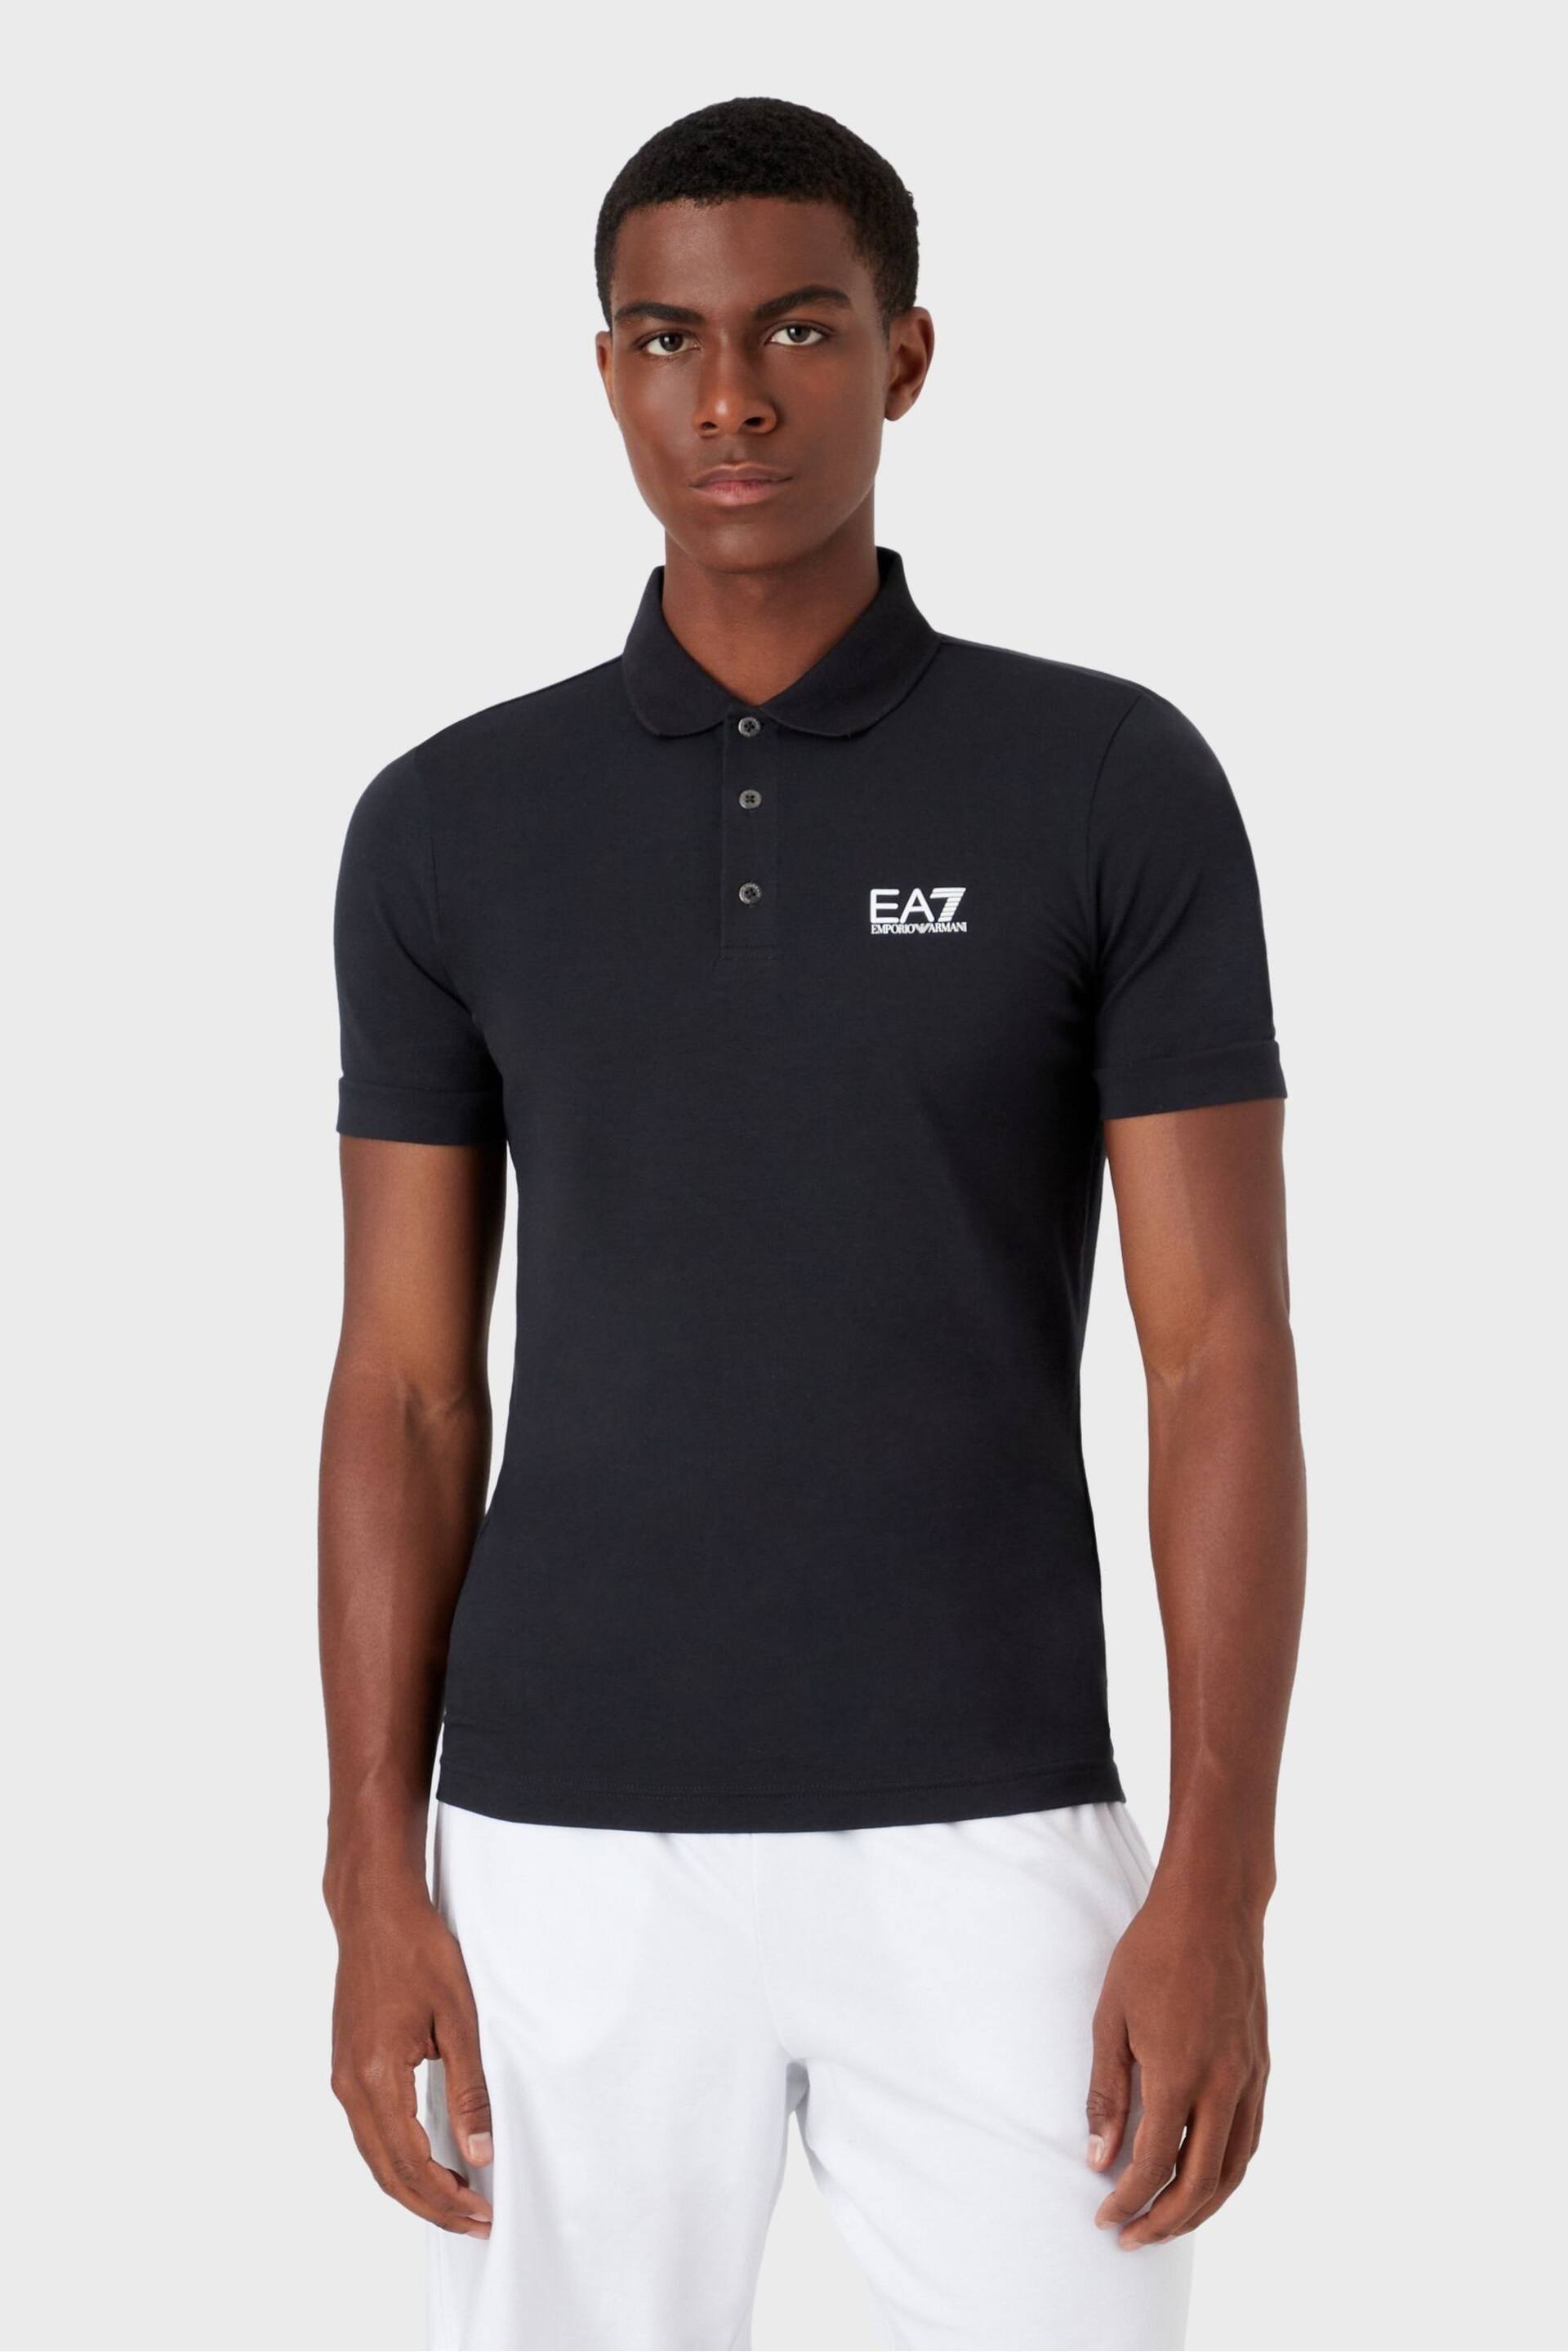 Emporio Armani EA7 Core ID Stretch Cotton Polo Shirt - Image 1 of 6